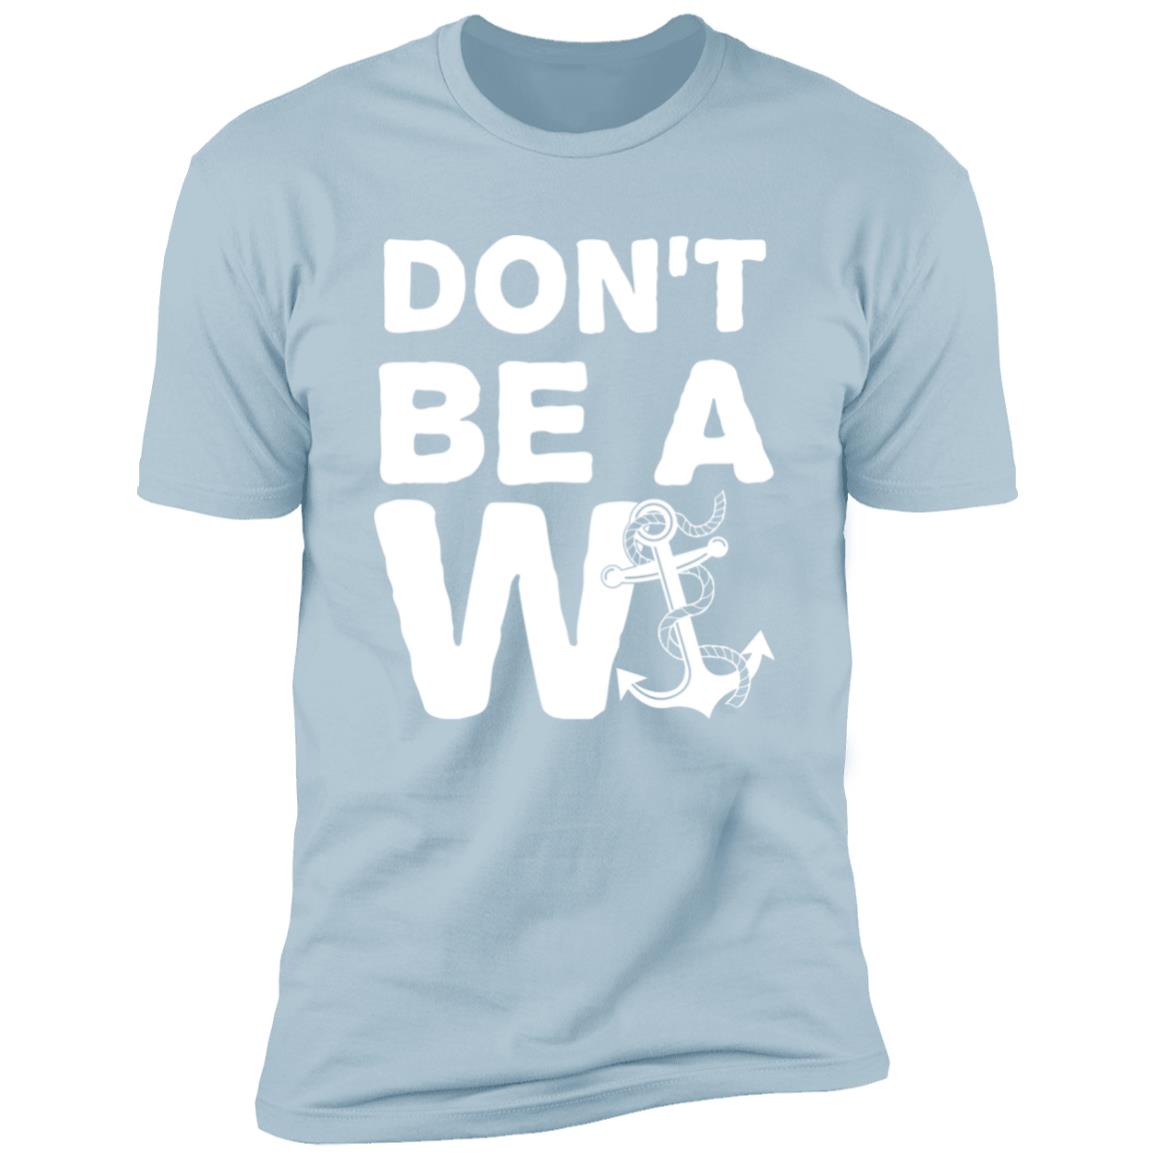 HRCL FL - Don't Be A Wanker - 2 Sided NL3600 Premium Short Sleeve T-Shirt